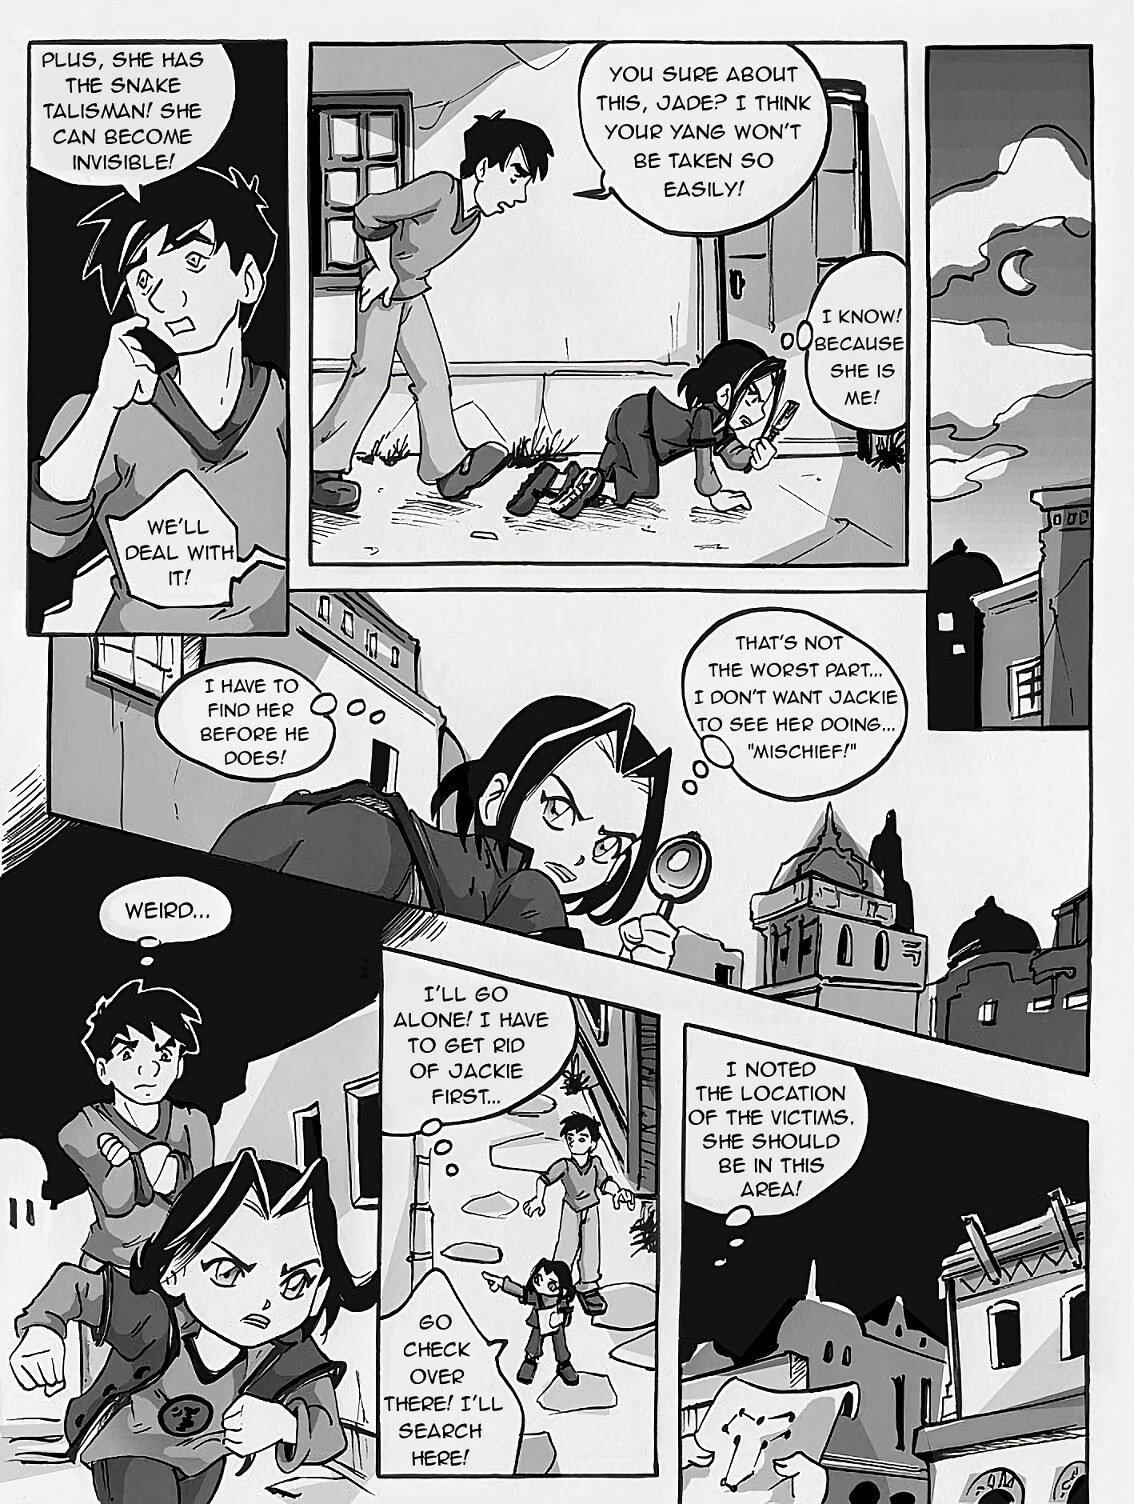 Jade Adventure - Page 49